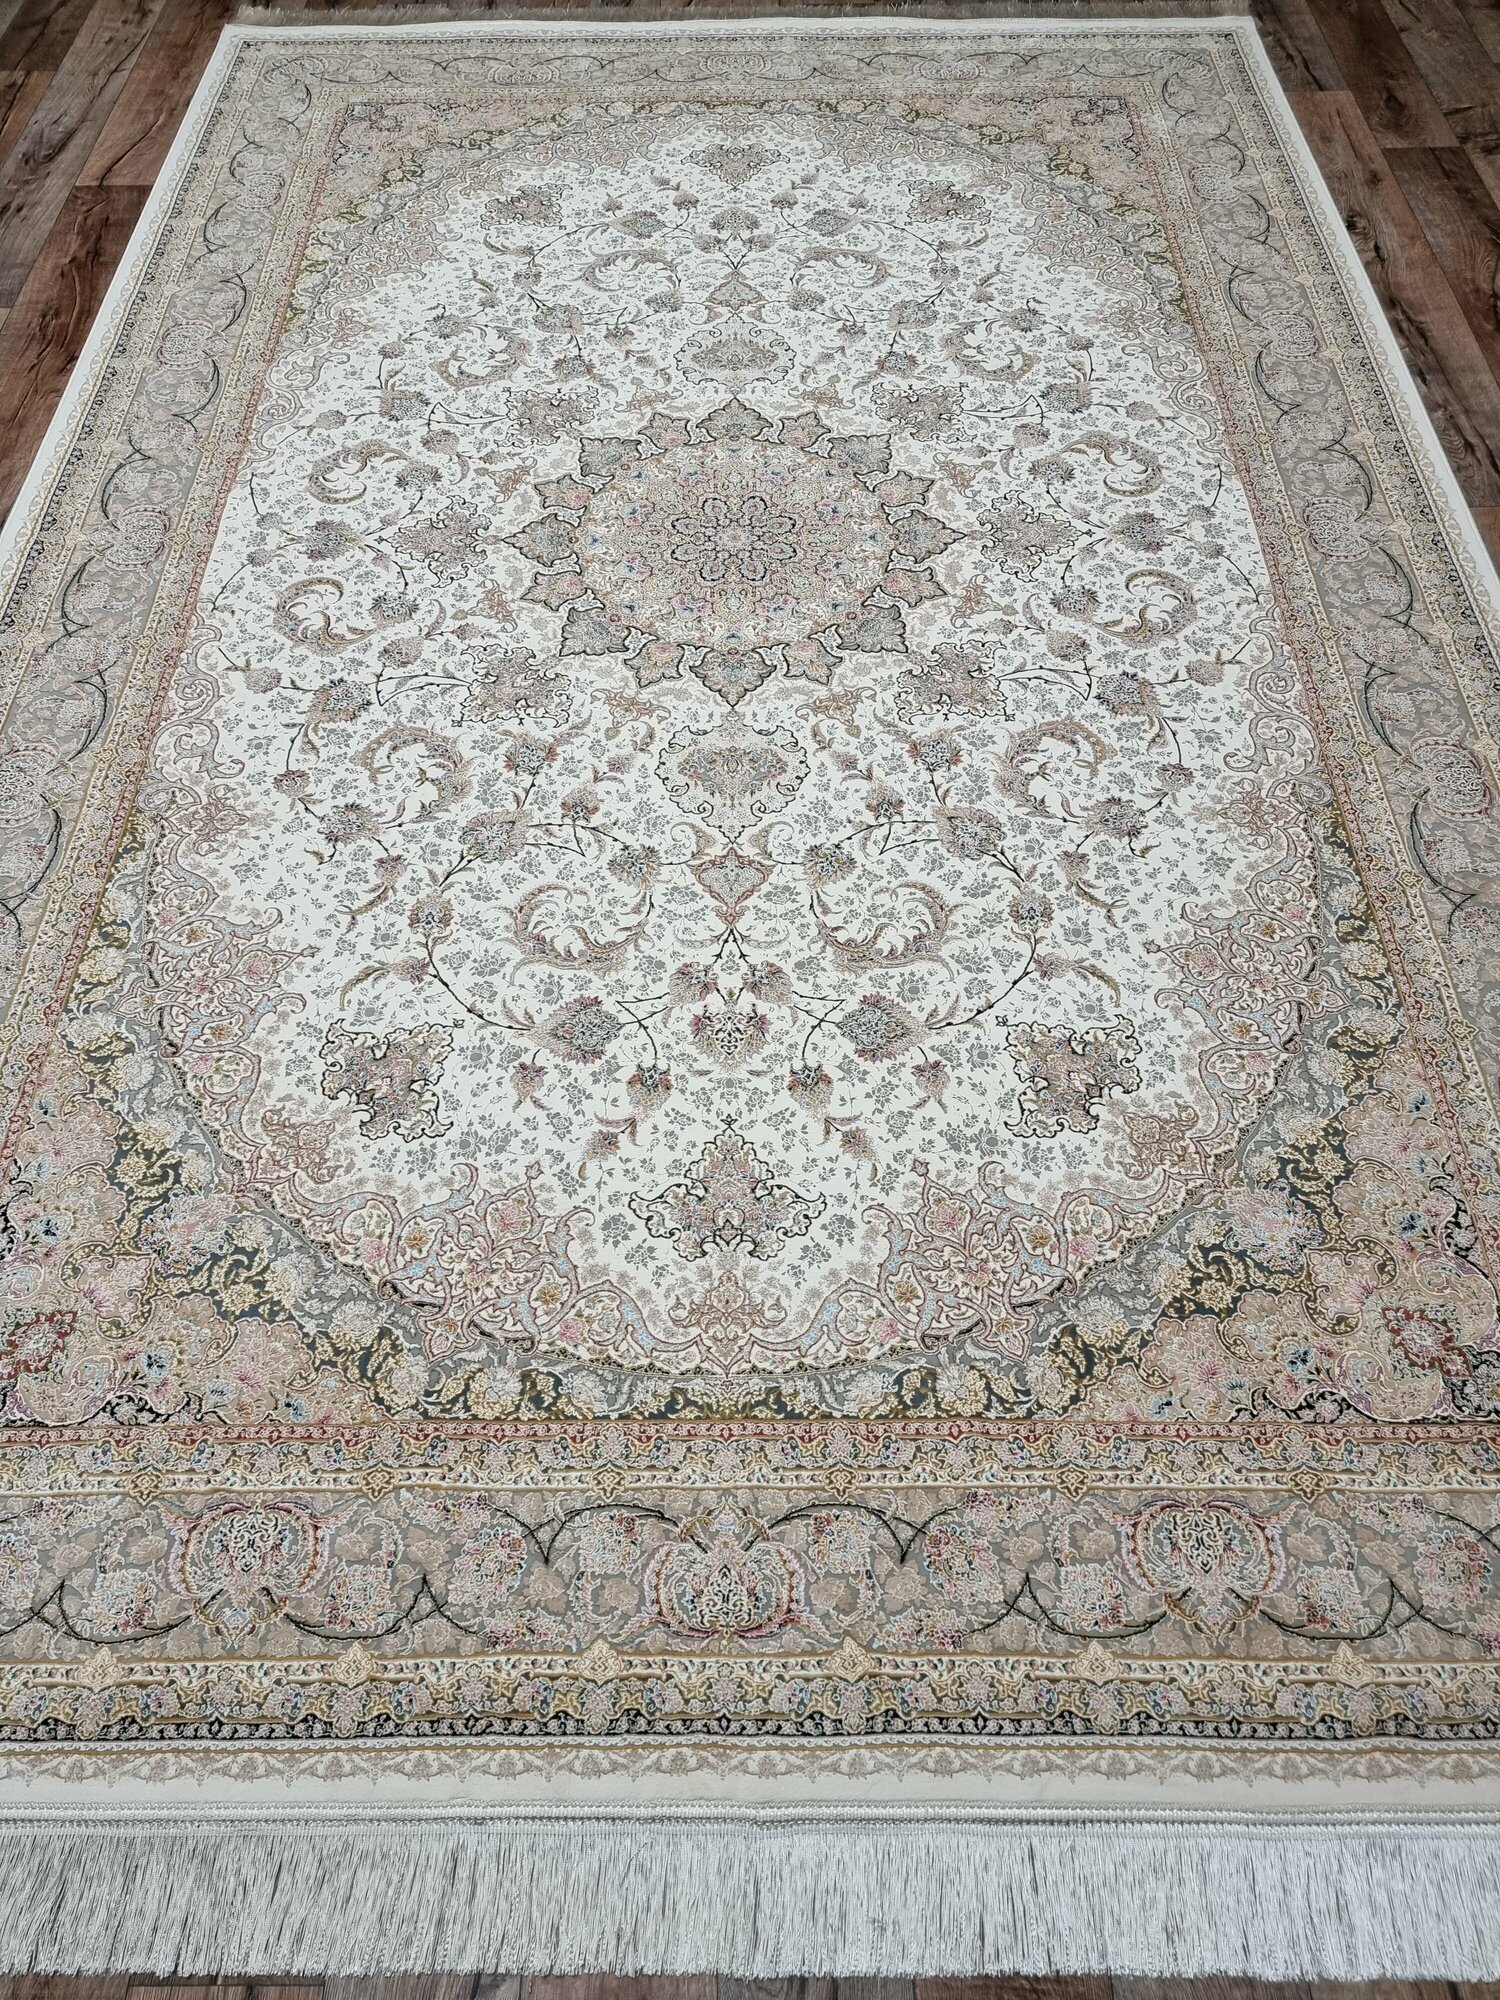 Персидский ковер Farrahi Carpet, Иран, размер 2х3 м